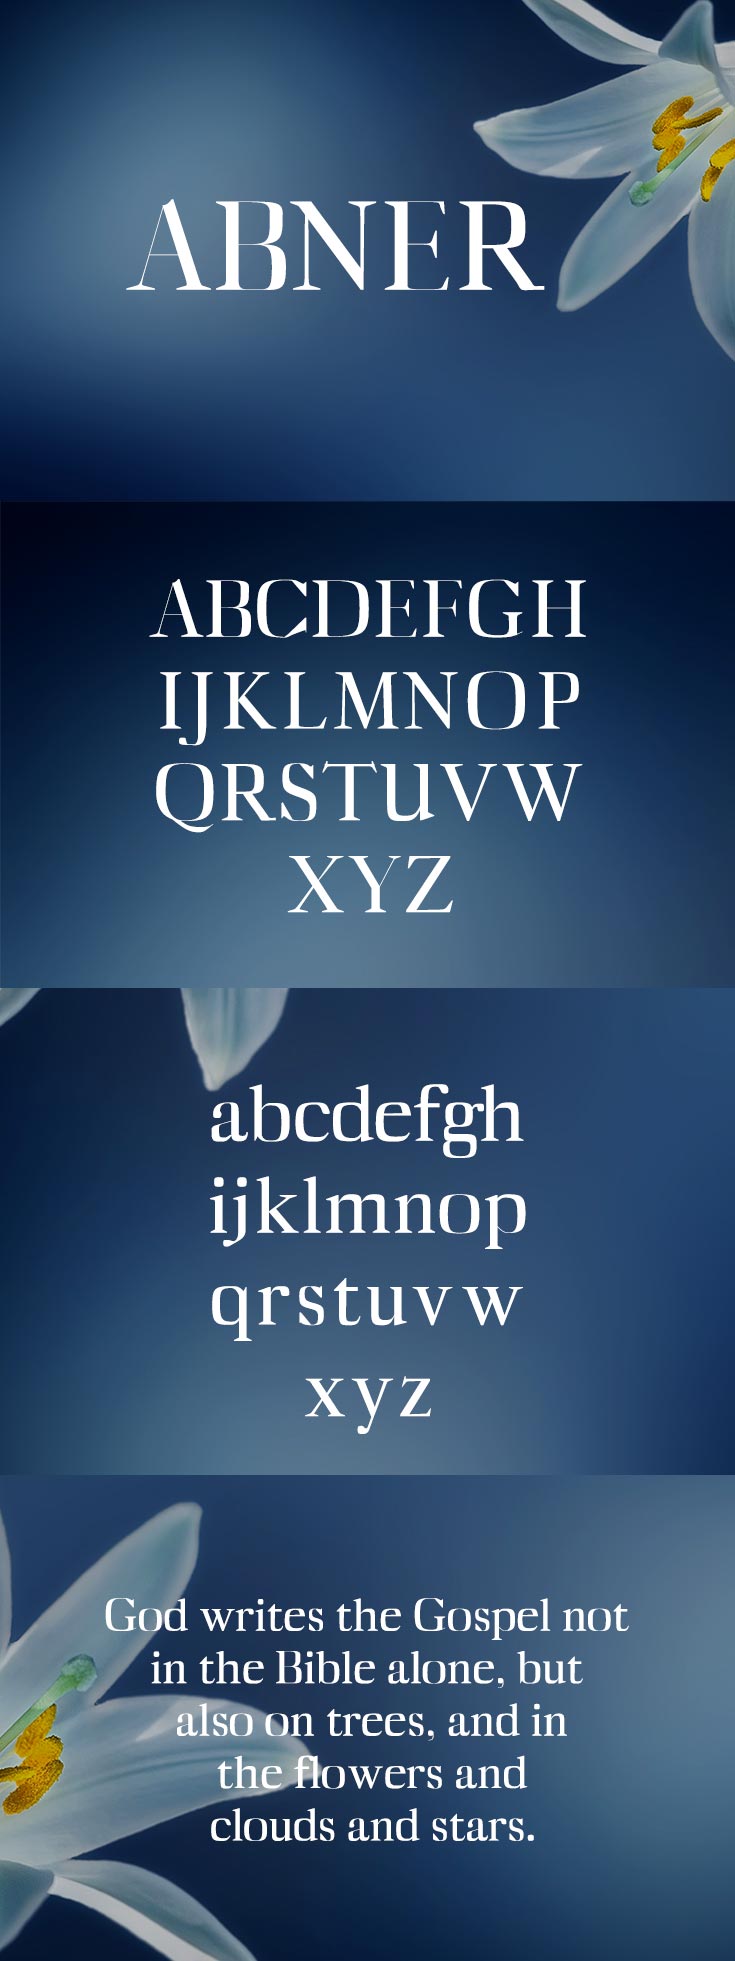 Free Abner Serif Font